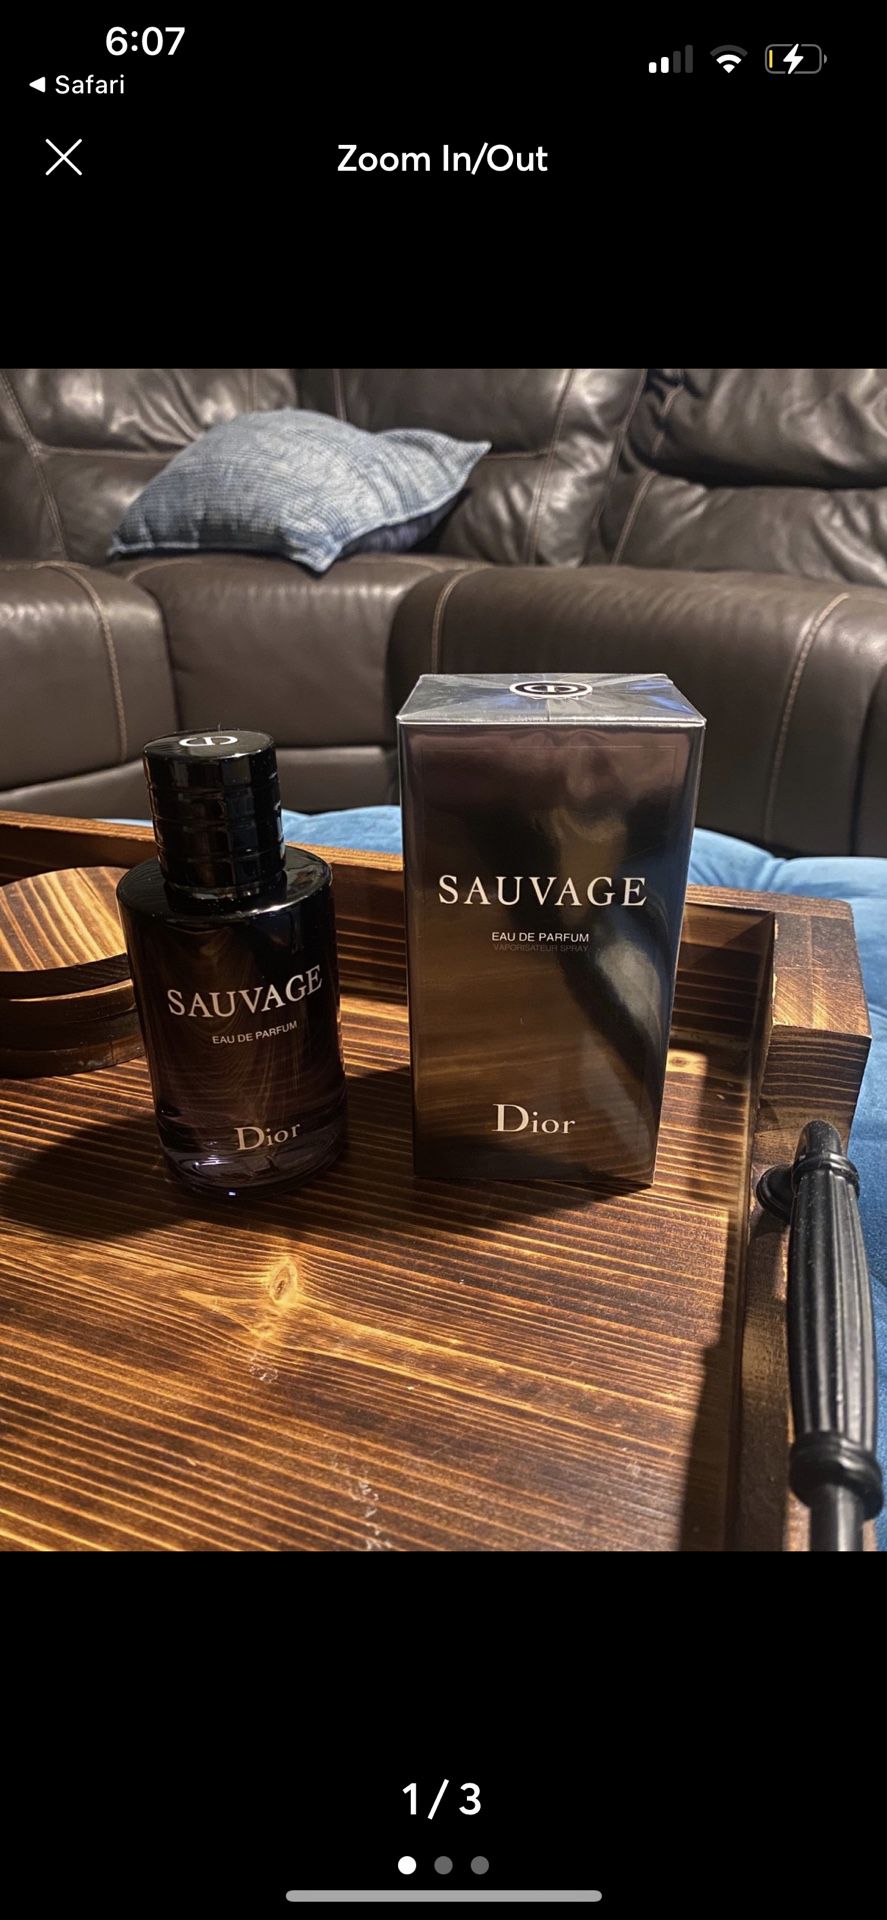 Dior Sauvage 3.4oz/100ml NEW IN BOX SEALED